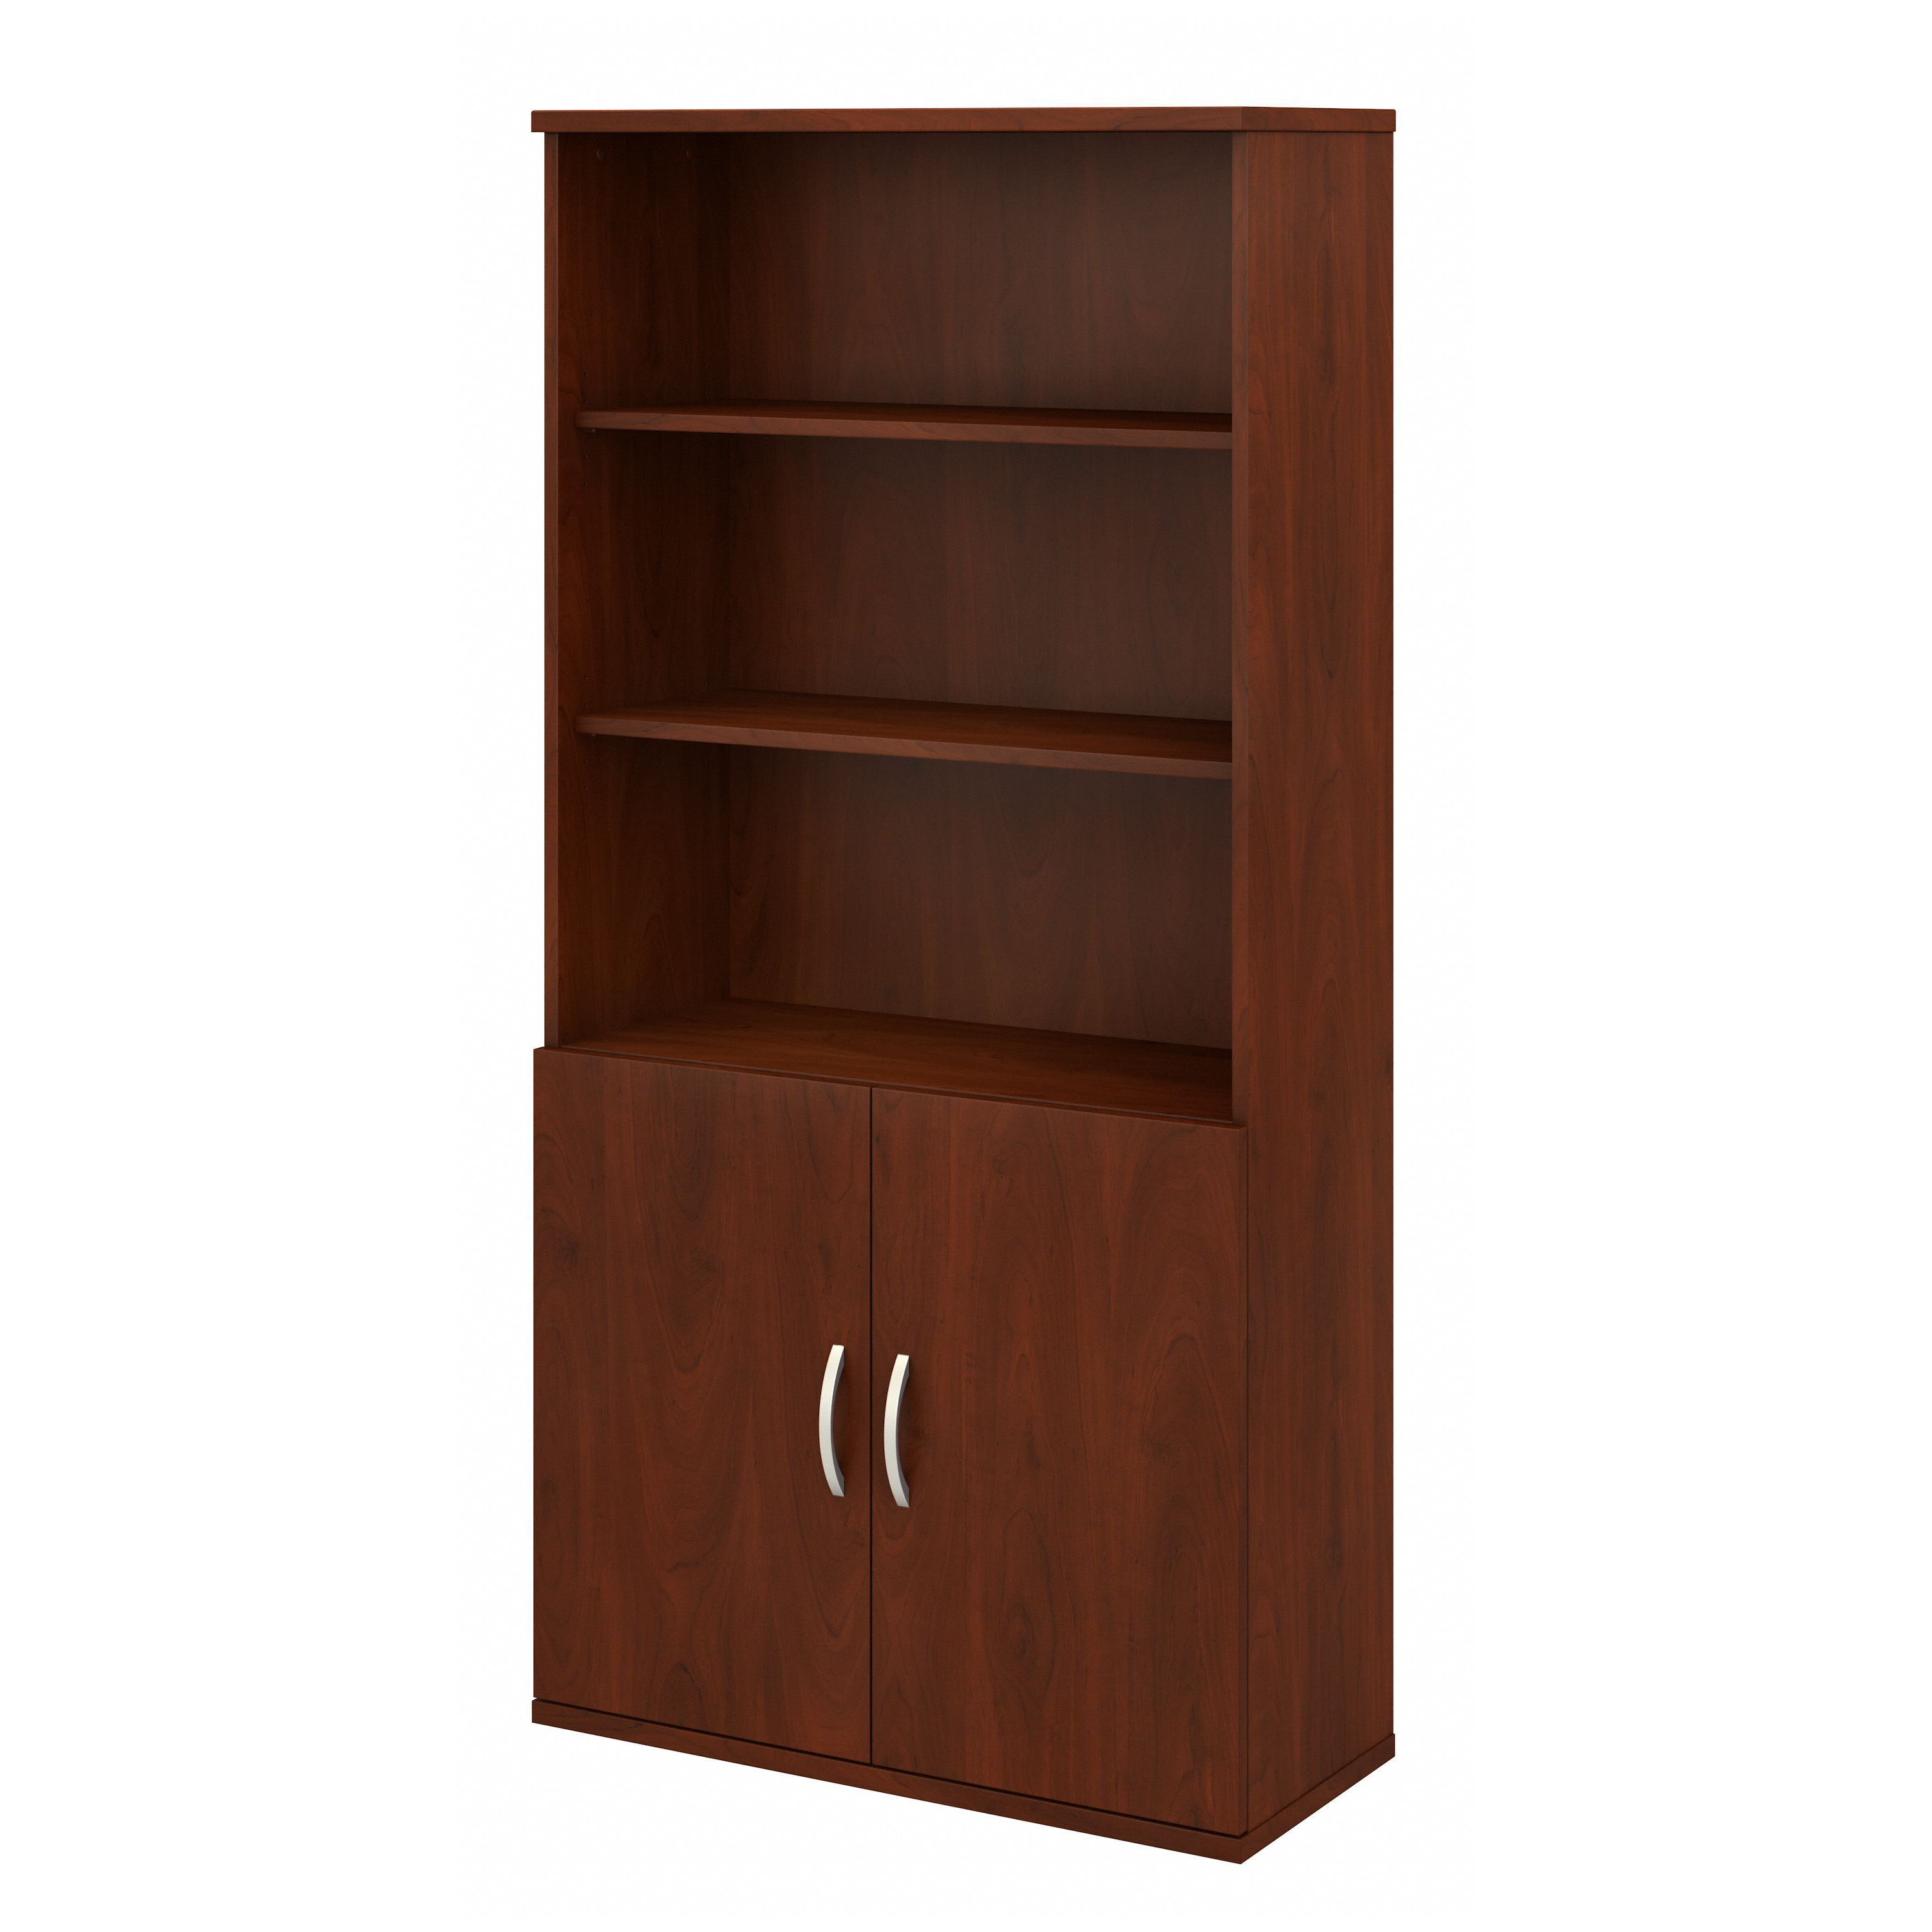 Shop Bush Business Furniture Studio C Tall 5 Shelf Bookcase with Doors 02 STC015HC #color_hansen cherry